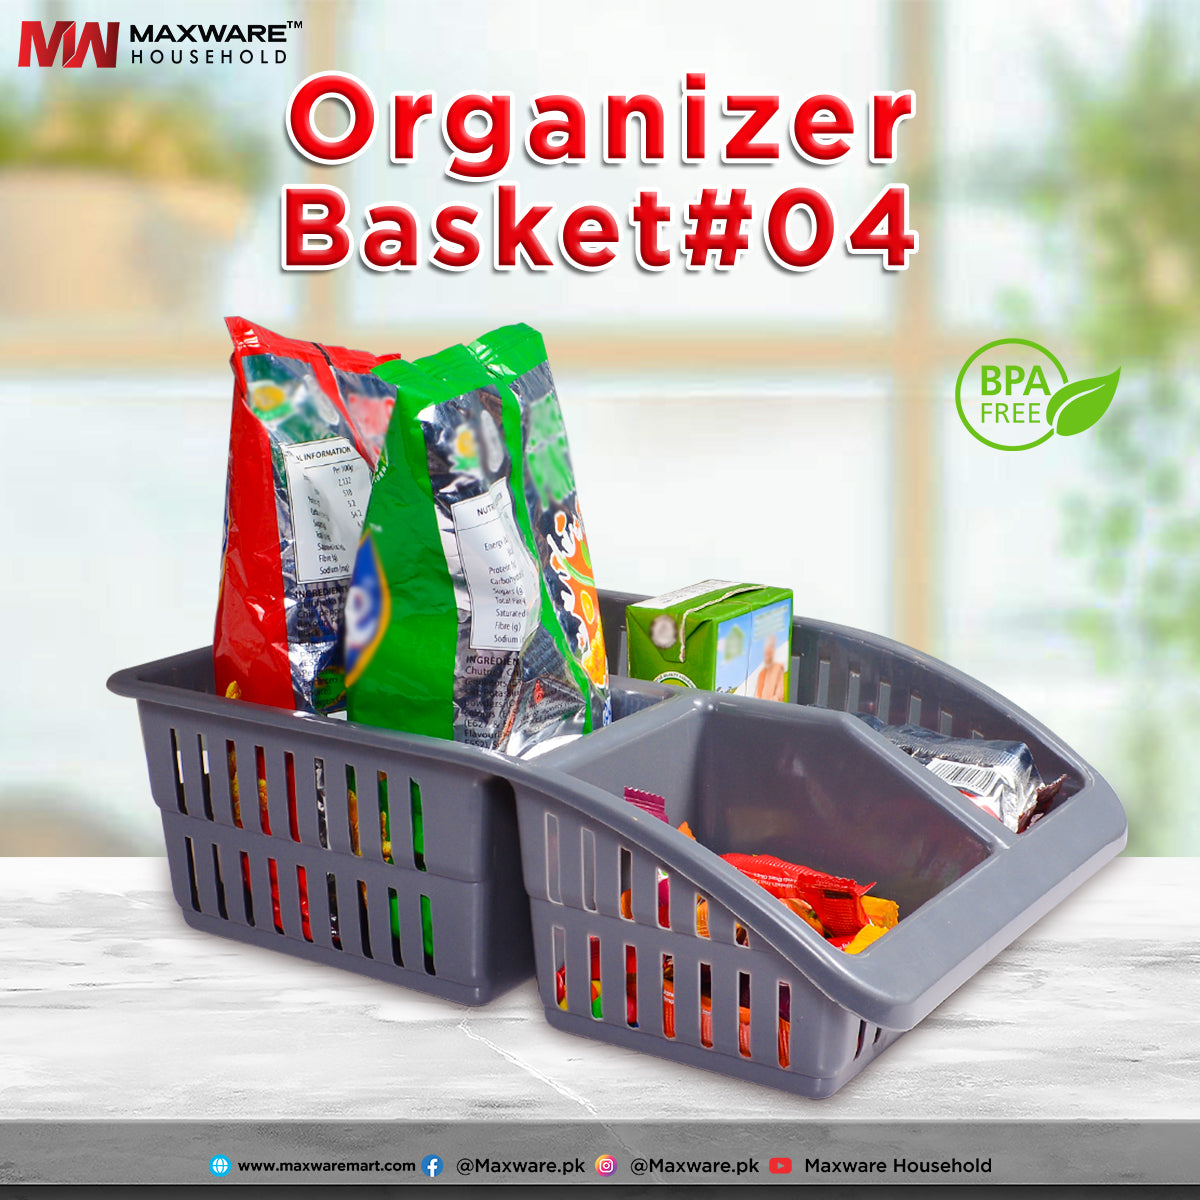 Organizer Basket 4